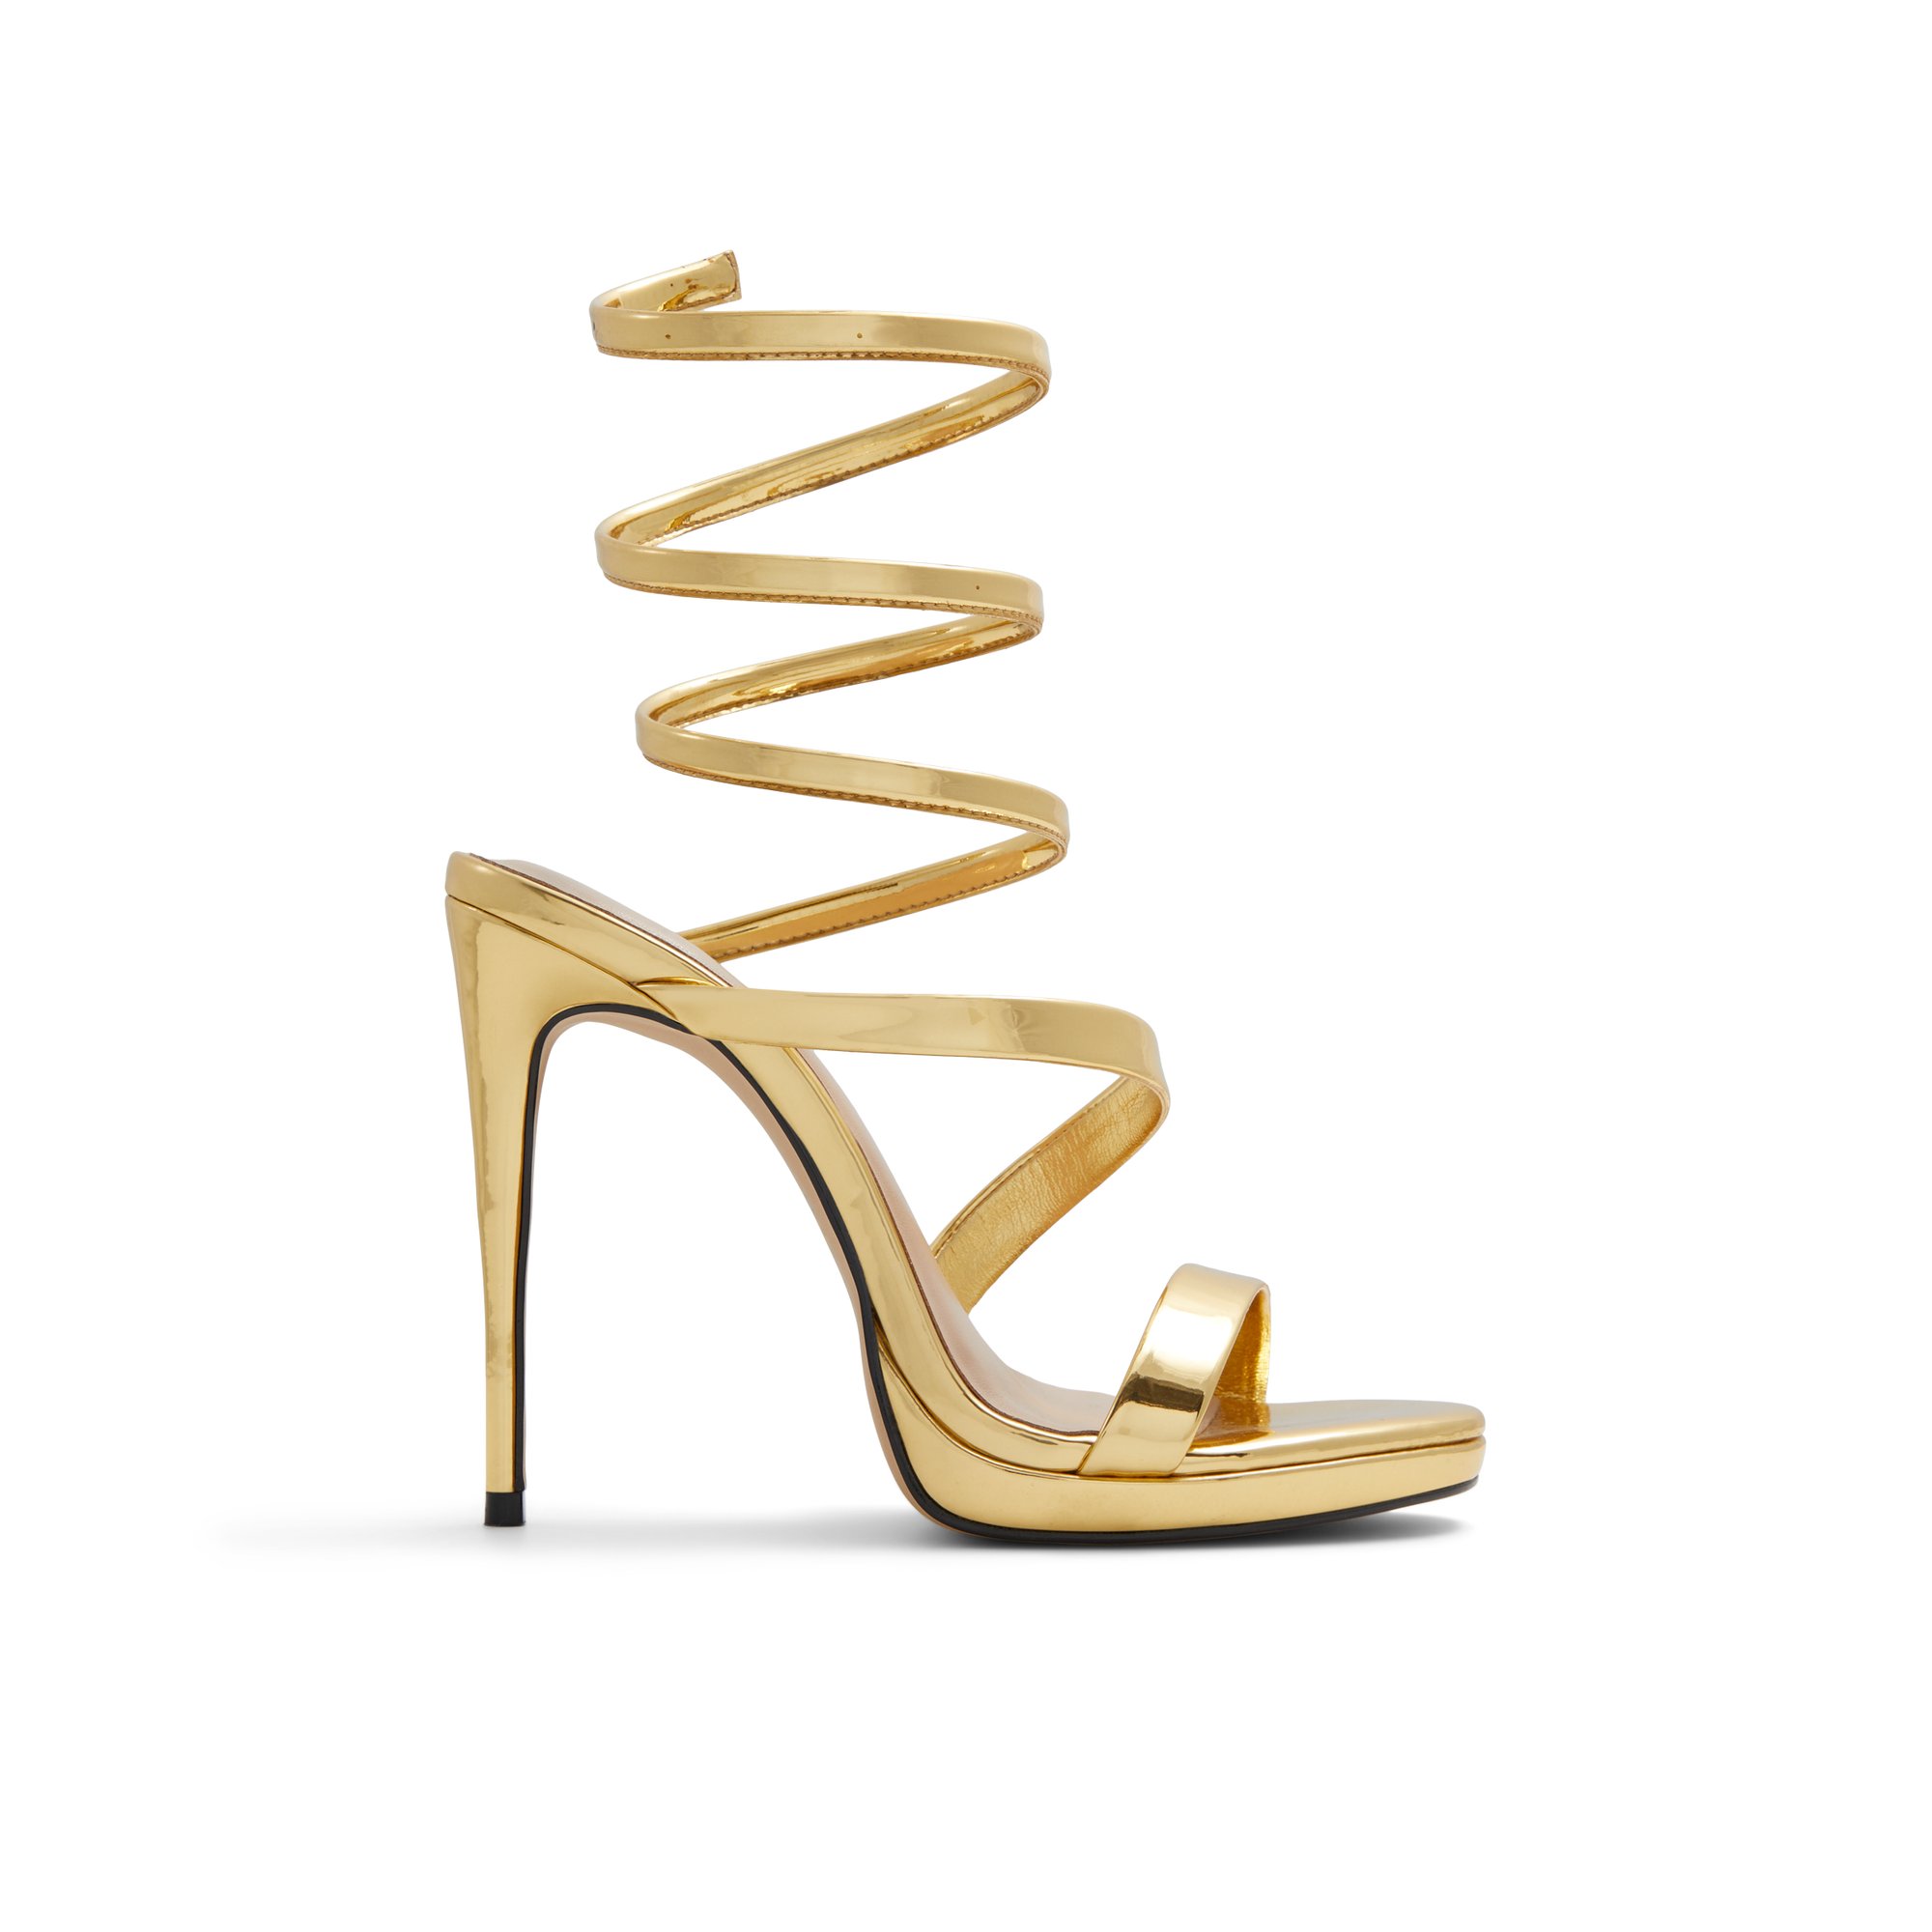 ALDO Katswirl - Women's Sandals Strappy - Gold